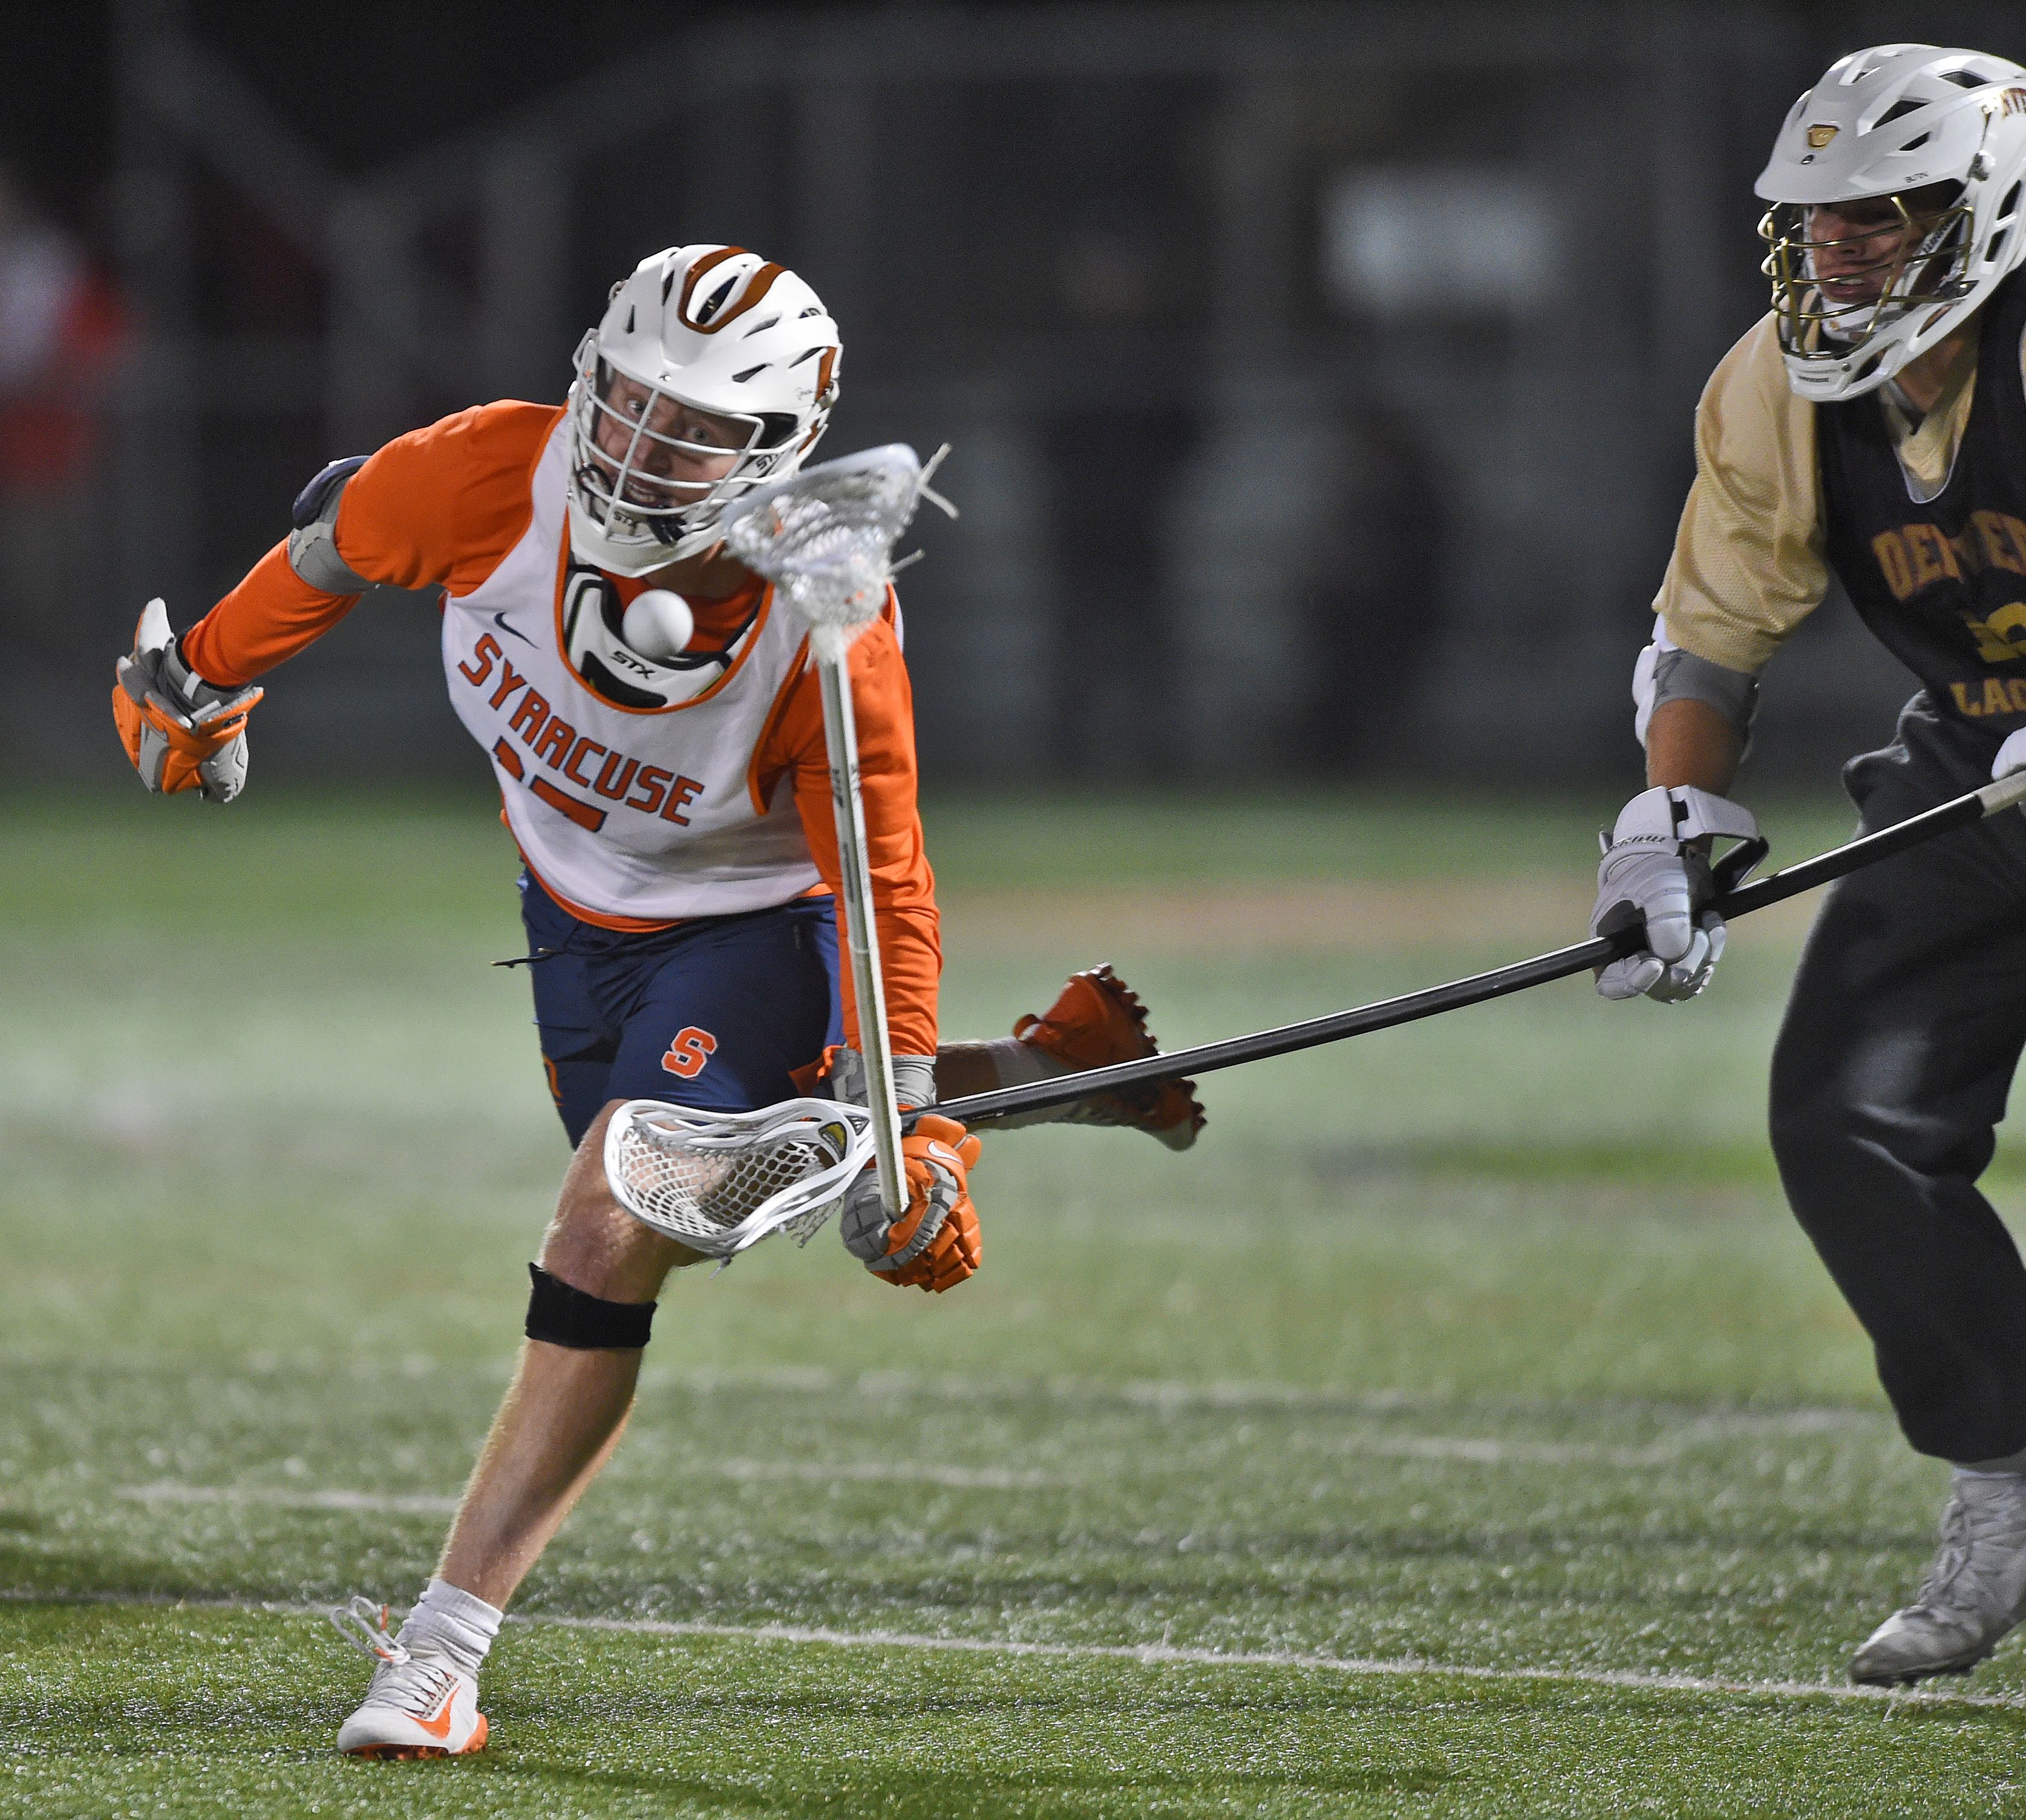 Syracuse University vs. Denver in a college lacrosse fall scrimmage at SUNY  Cortland 